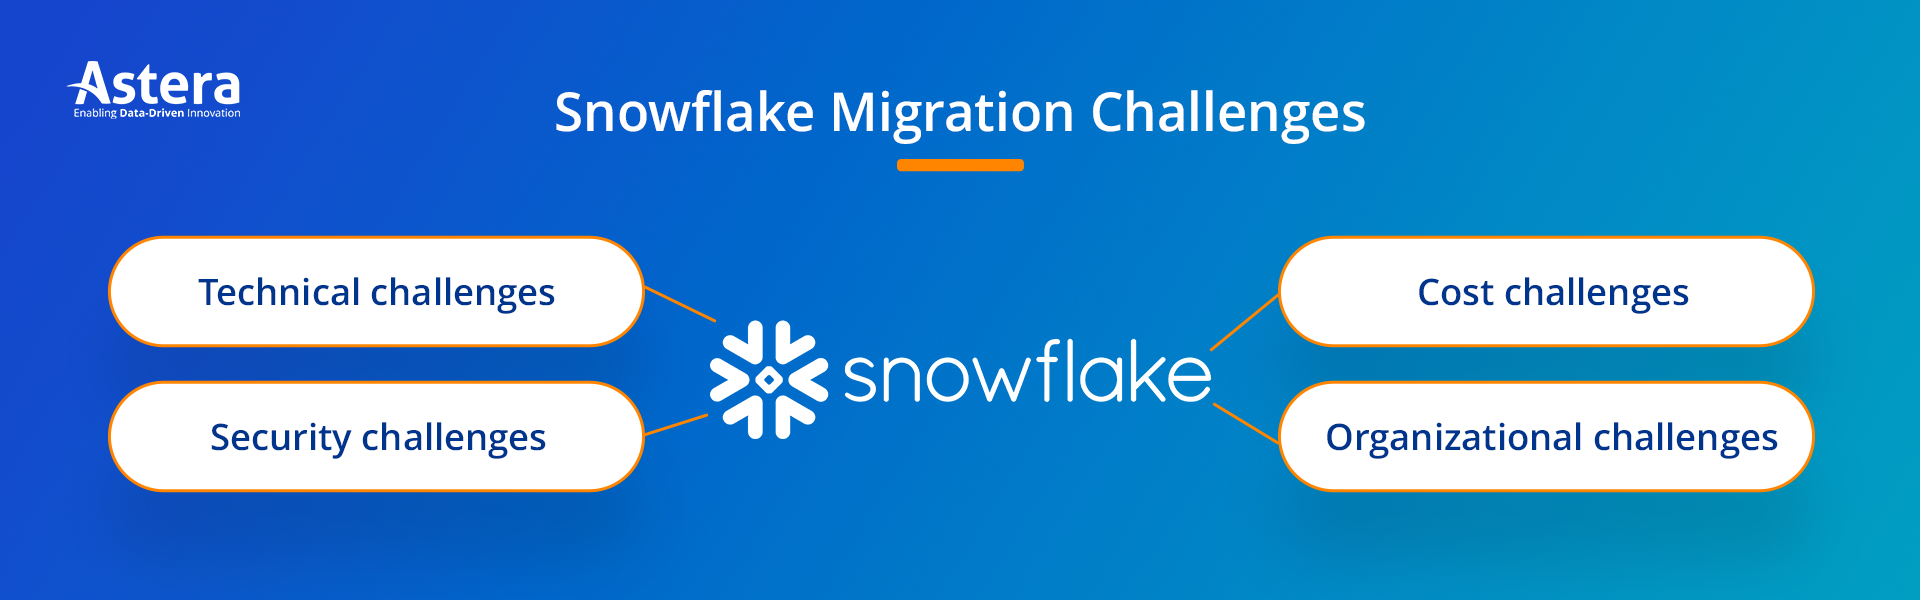 snowflake migration challenges